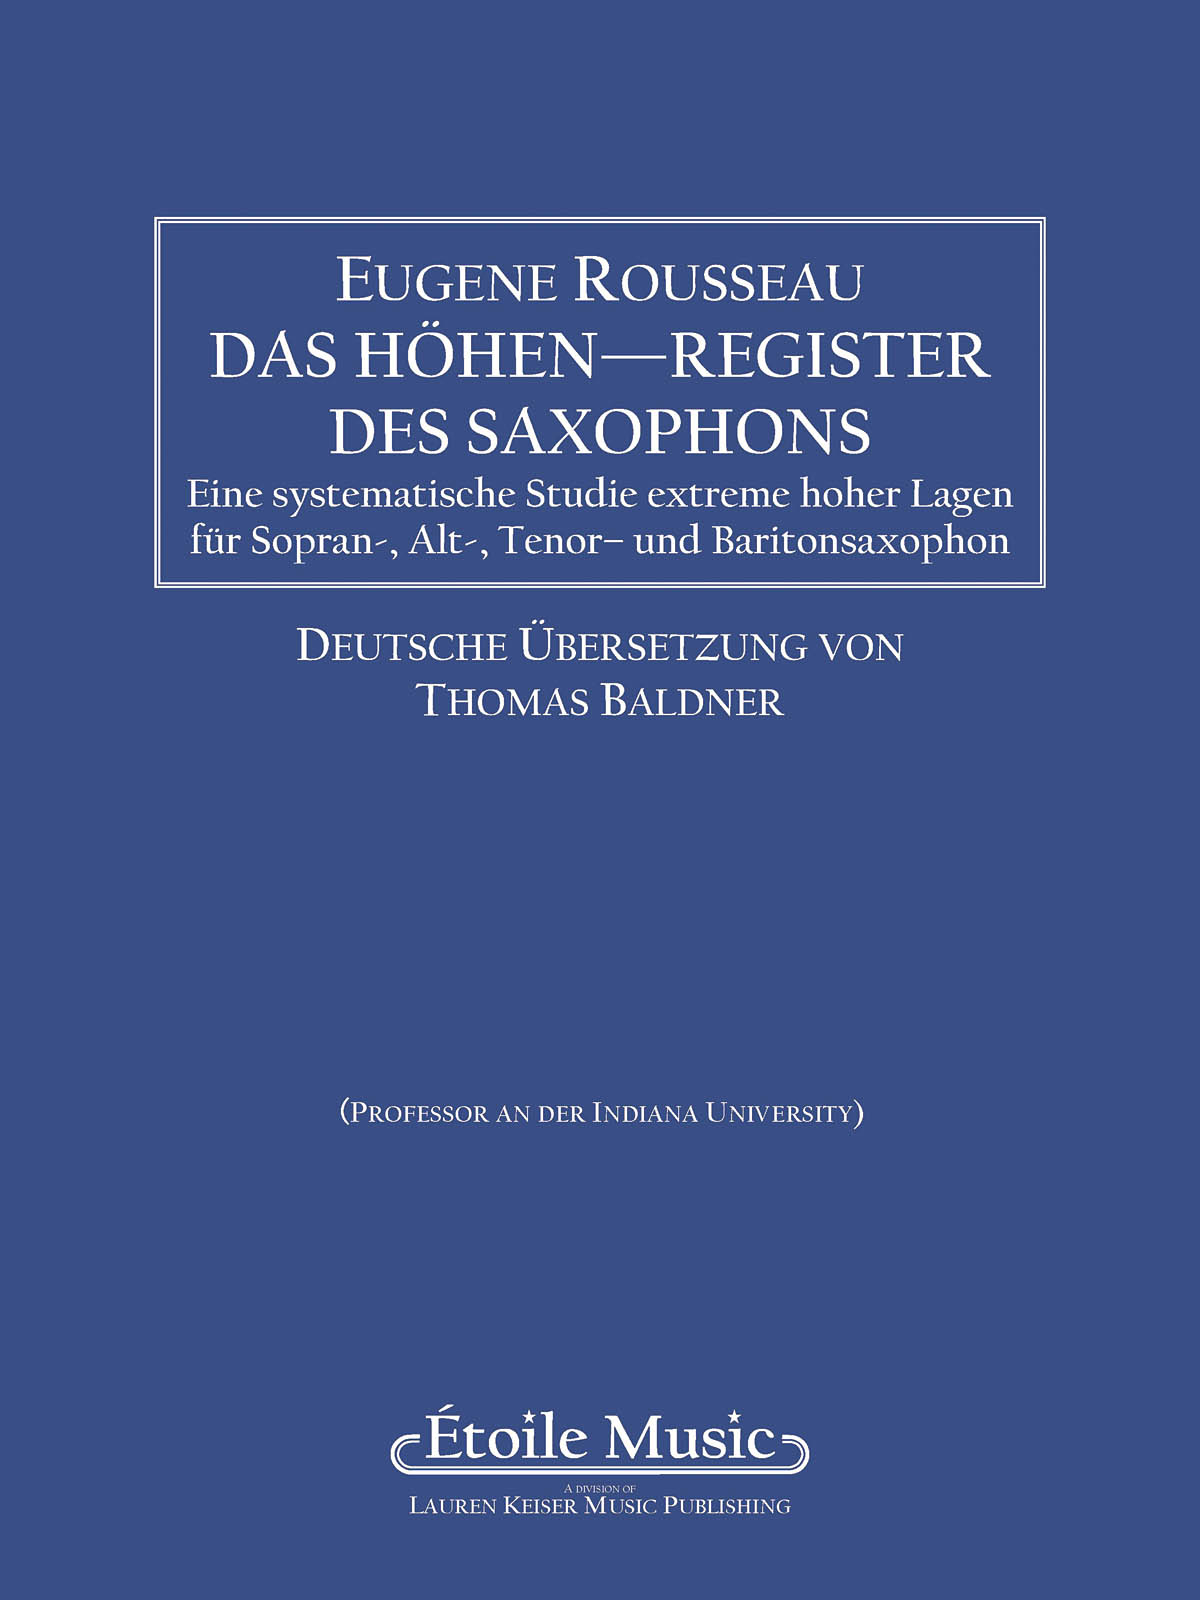 Eugene Rousseau: Saxophone High Tones - German Edition: Saxophone: Instrumental